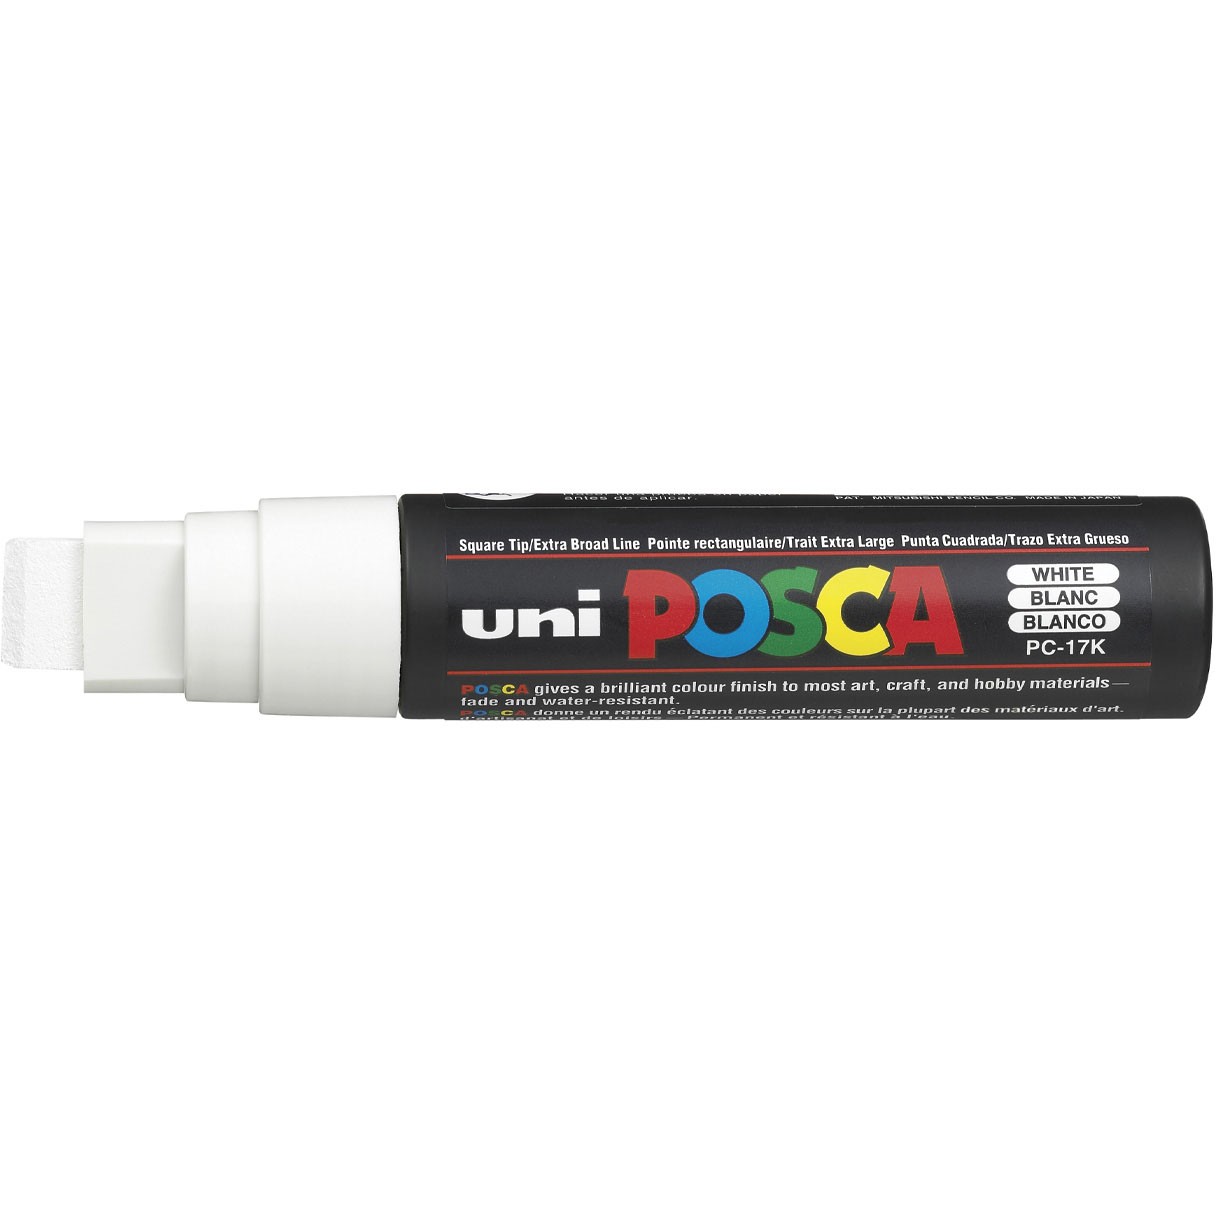 Uni Posca 17K ekstra bred paintmarker med 15 mm spids i farven hvid